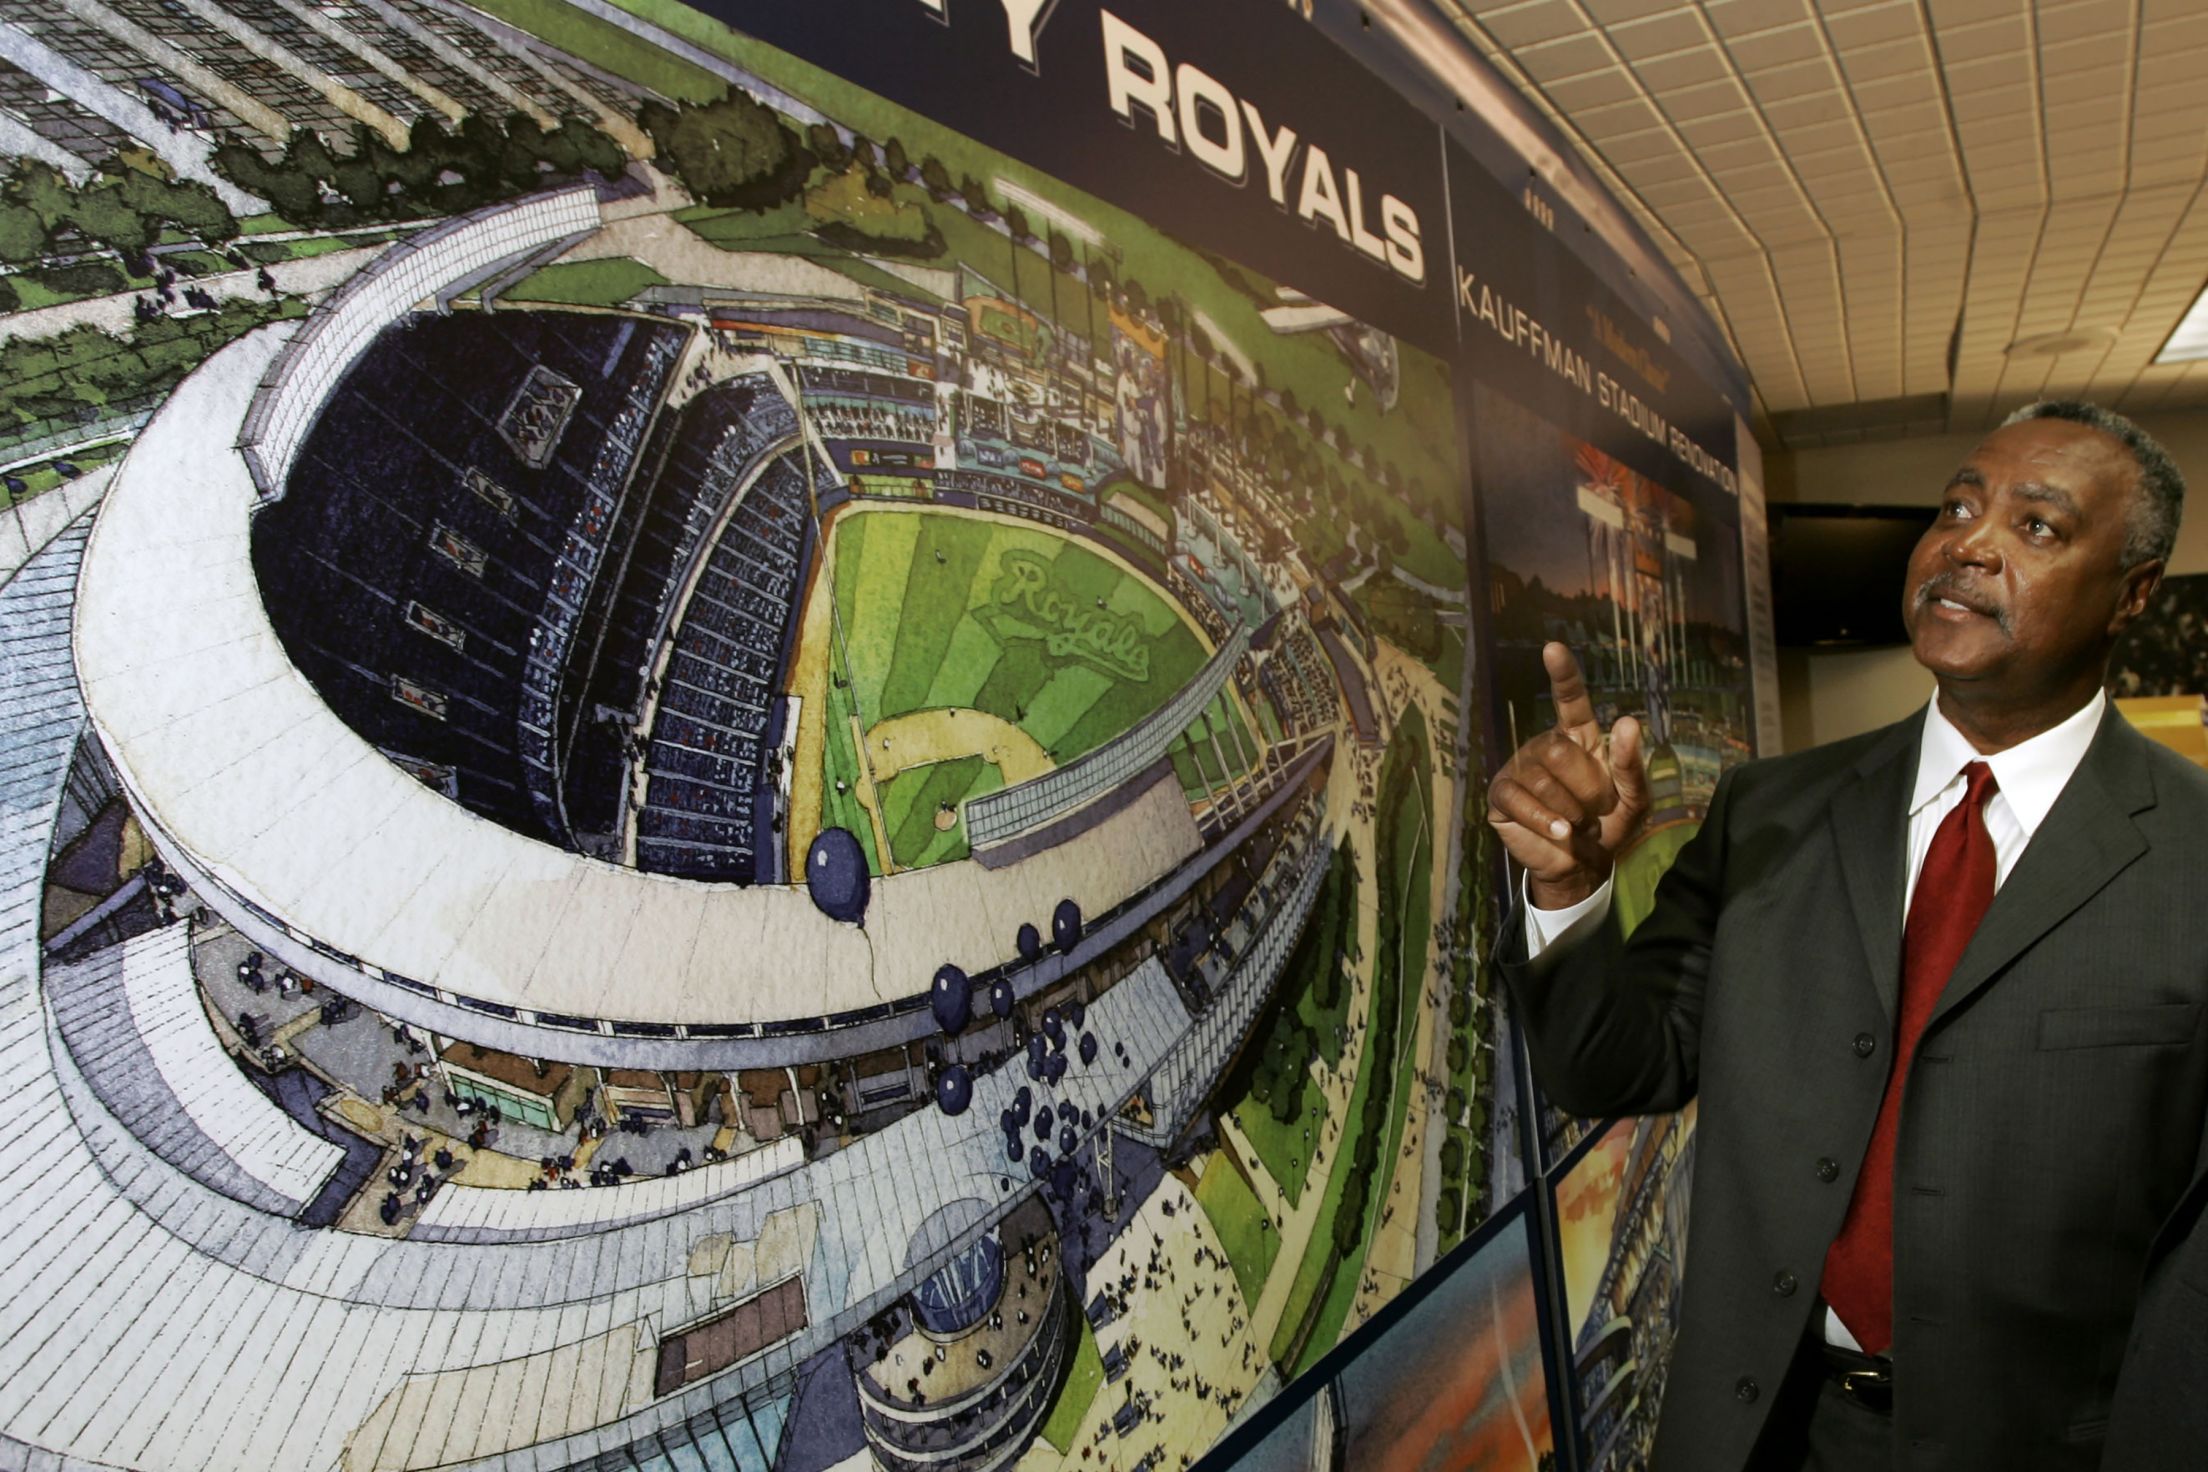 Kansas City Royals - Happy birthday to #Royals Hall of Famer Frank